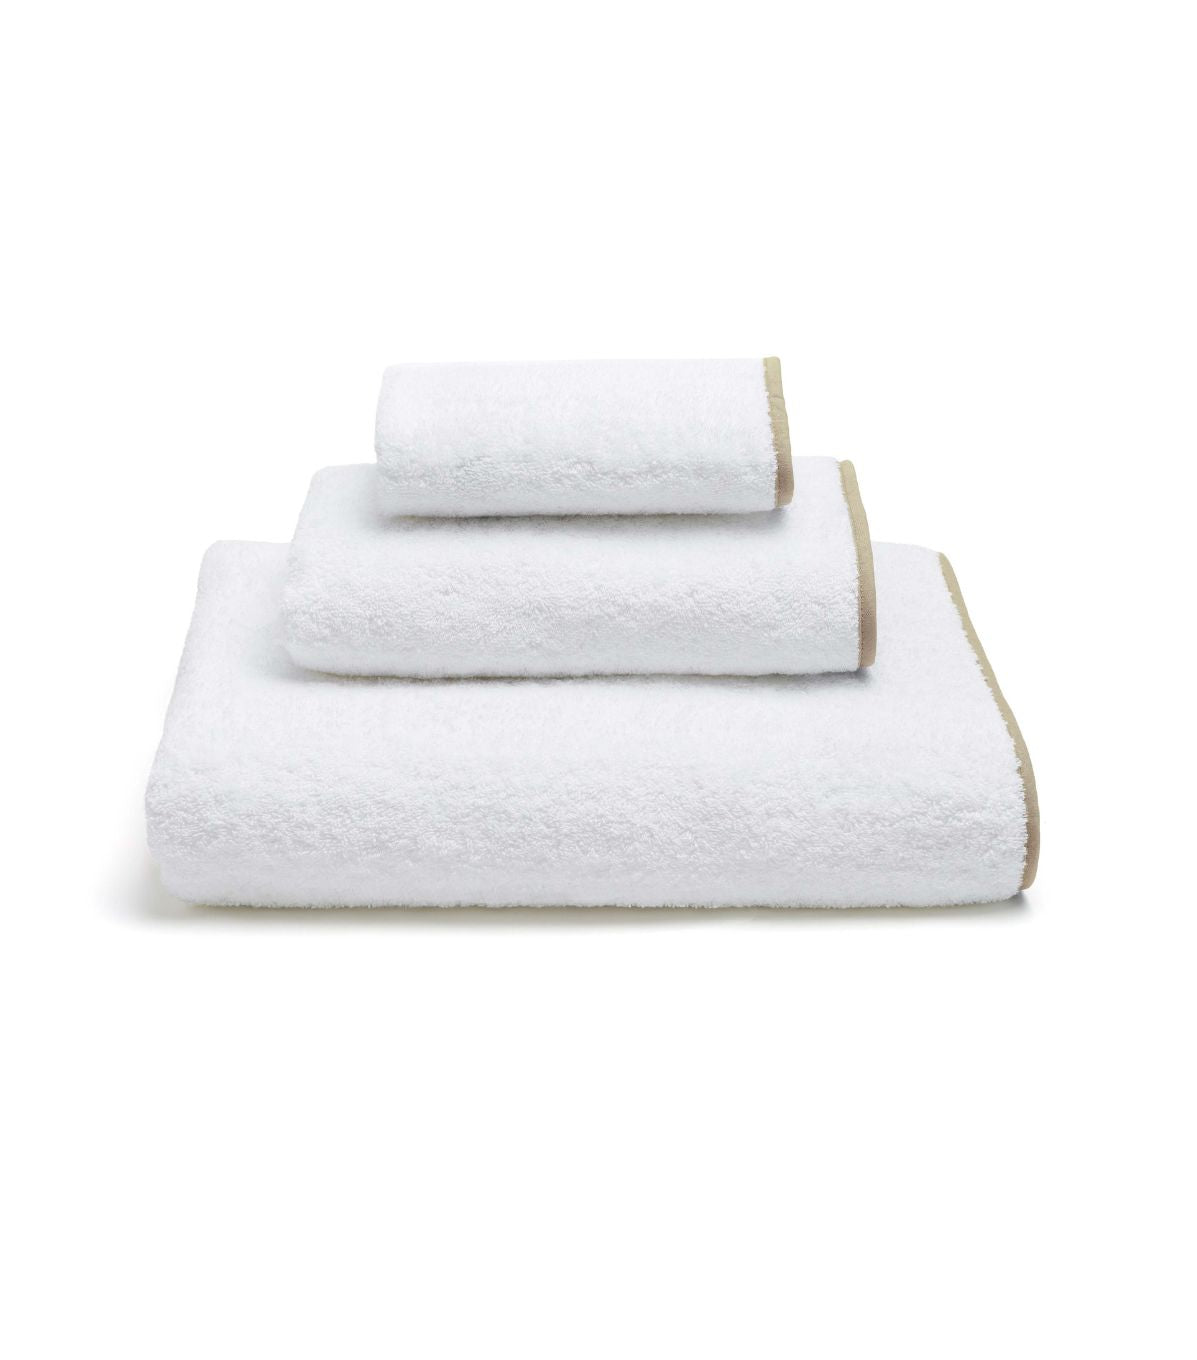 torres-novas-mira-3-piece-towel-set-product-silver-grey-website.jpg